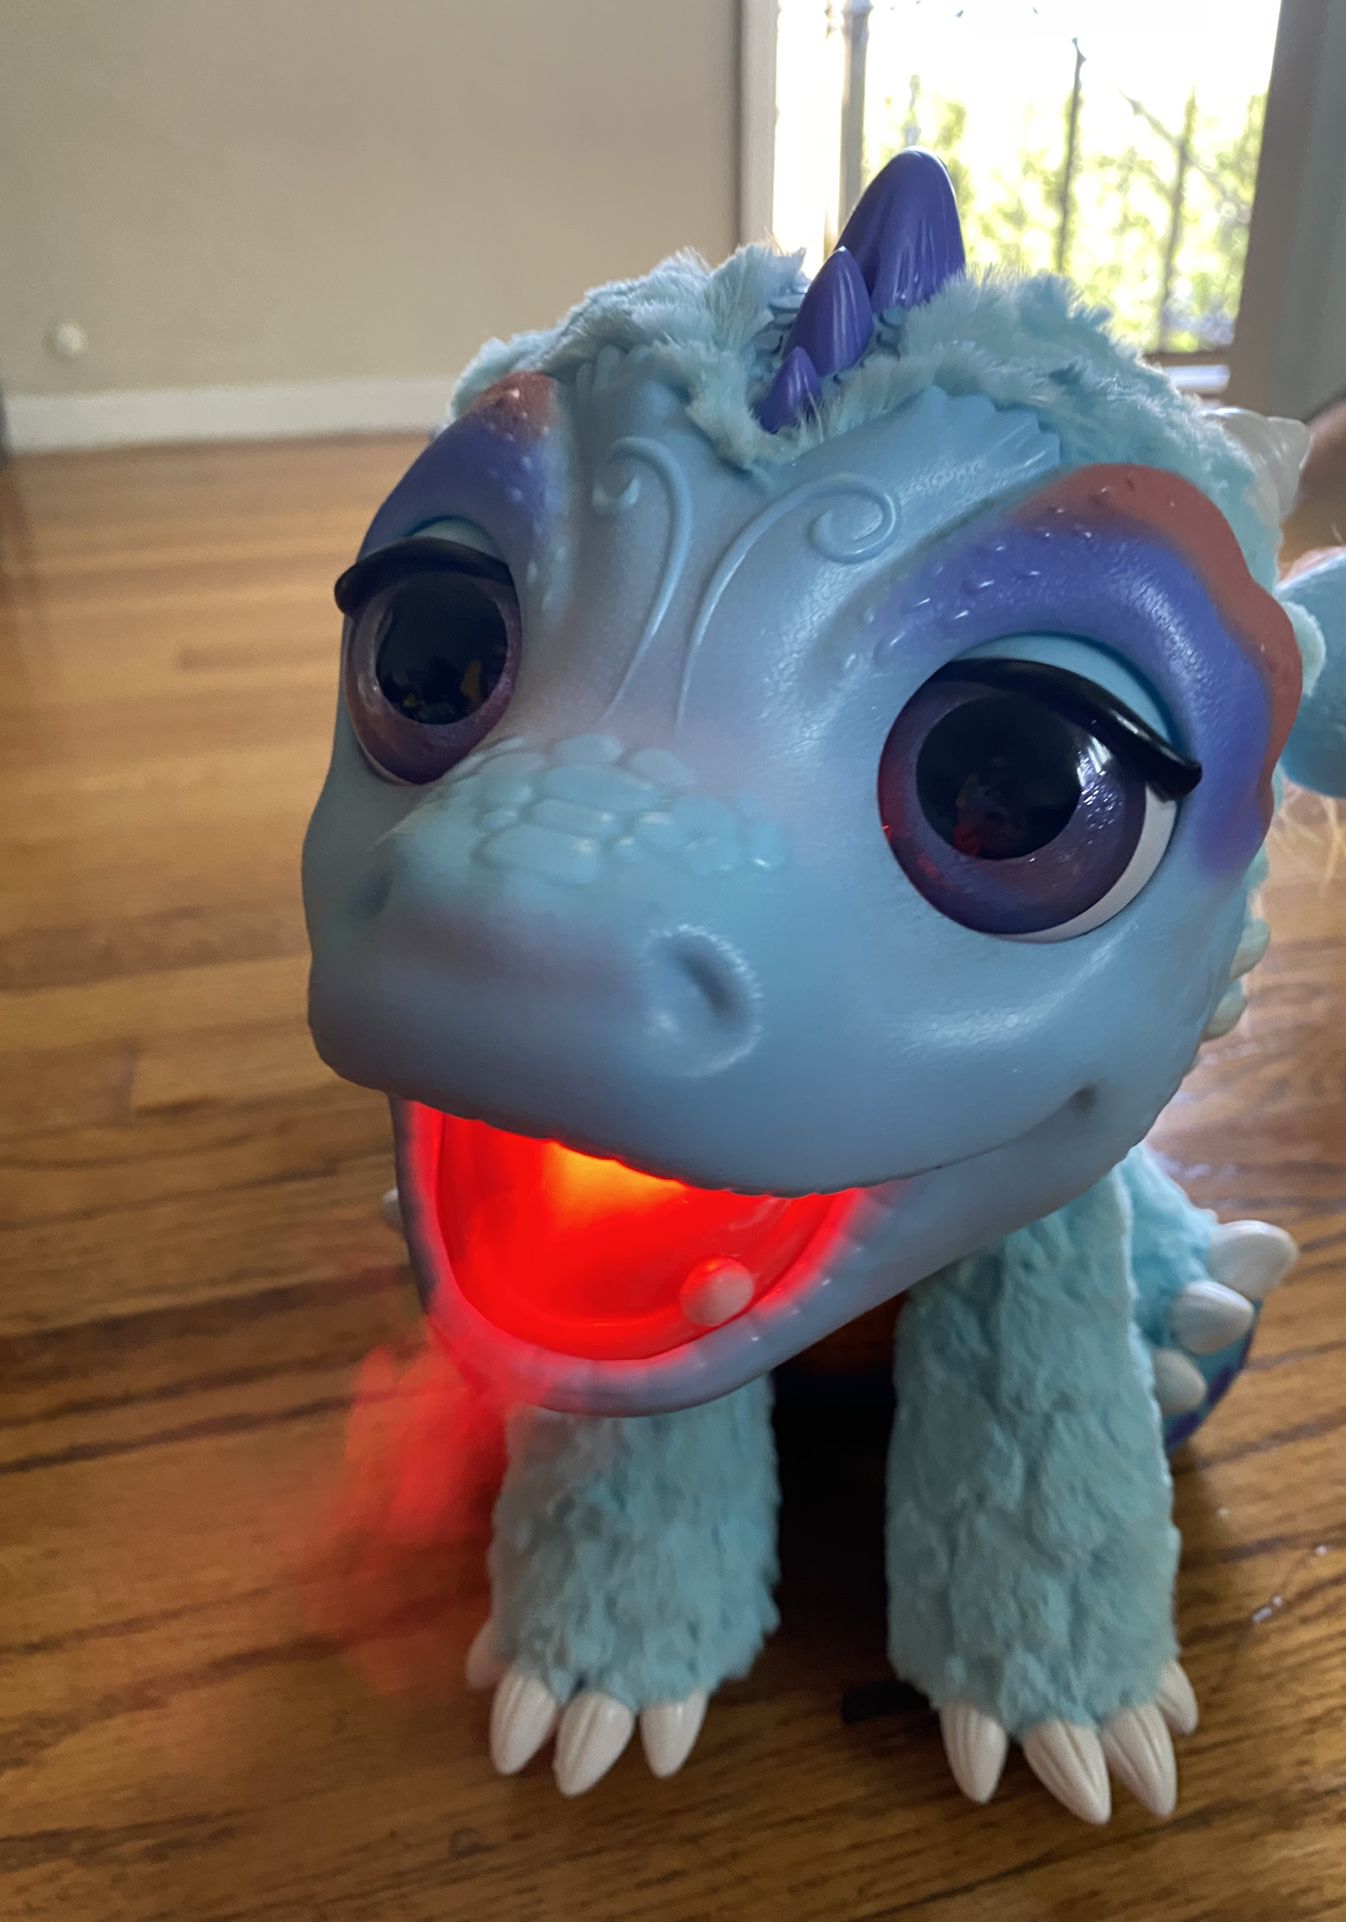 FurReal friends animatronic dragon toy